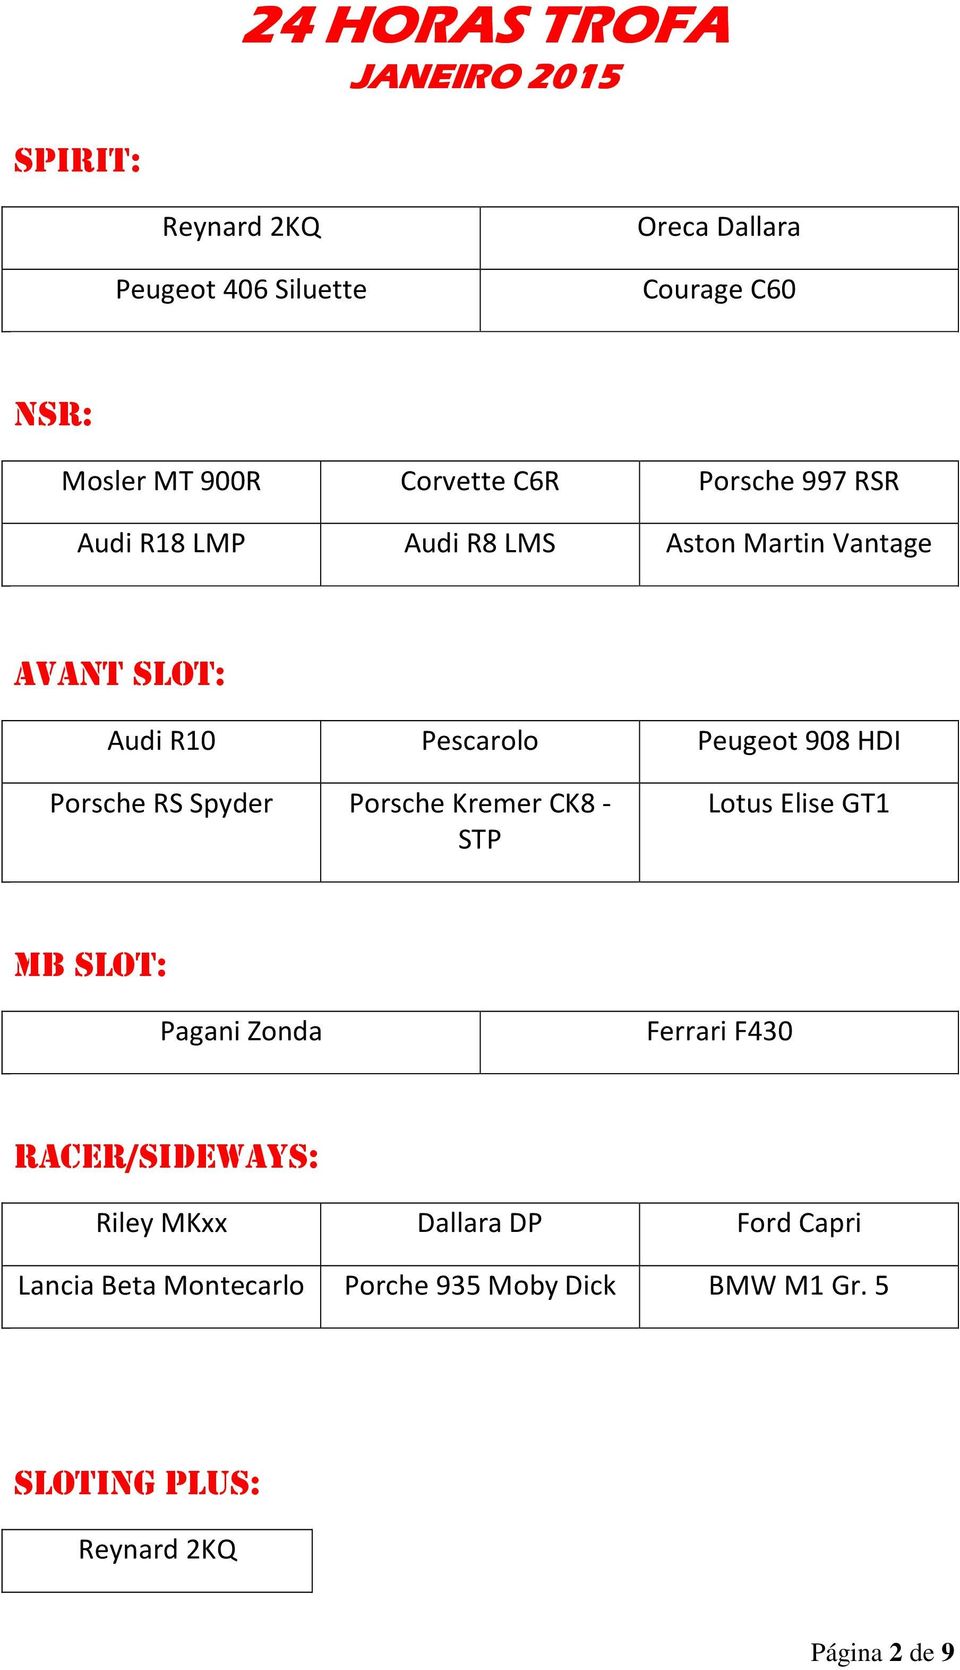 Spyder Porsche Kremer CK8 - STP Lotus Elise GT1 MB SLOT: Pagani Zonda Ferrari F430 RACER/SIDEWAYS: Riley MKxx